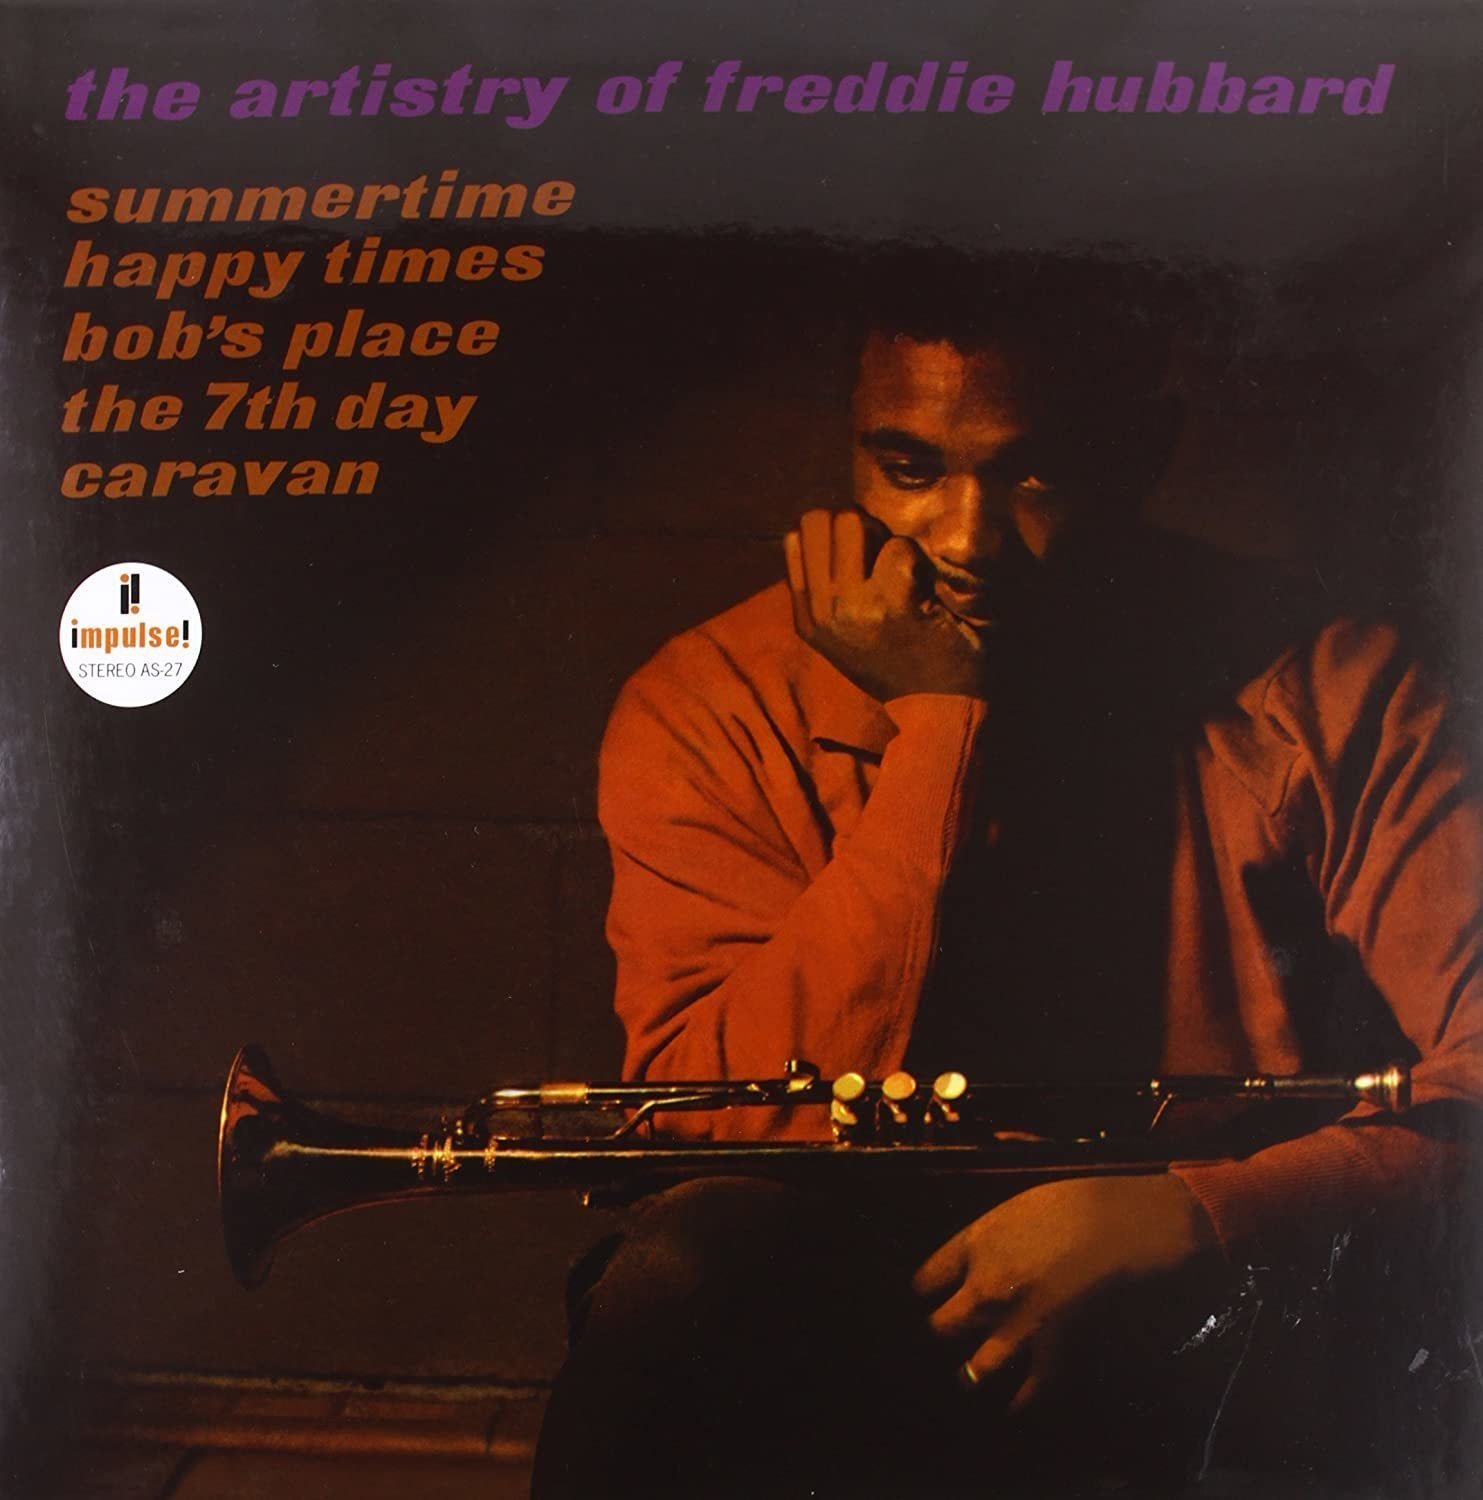 Vinylskiva Freddie Hubbard - The Artistry Of Freddie Hubbard (2 LP)